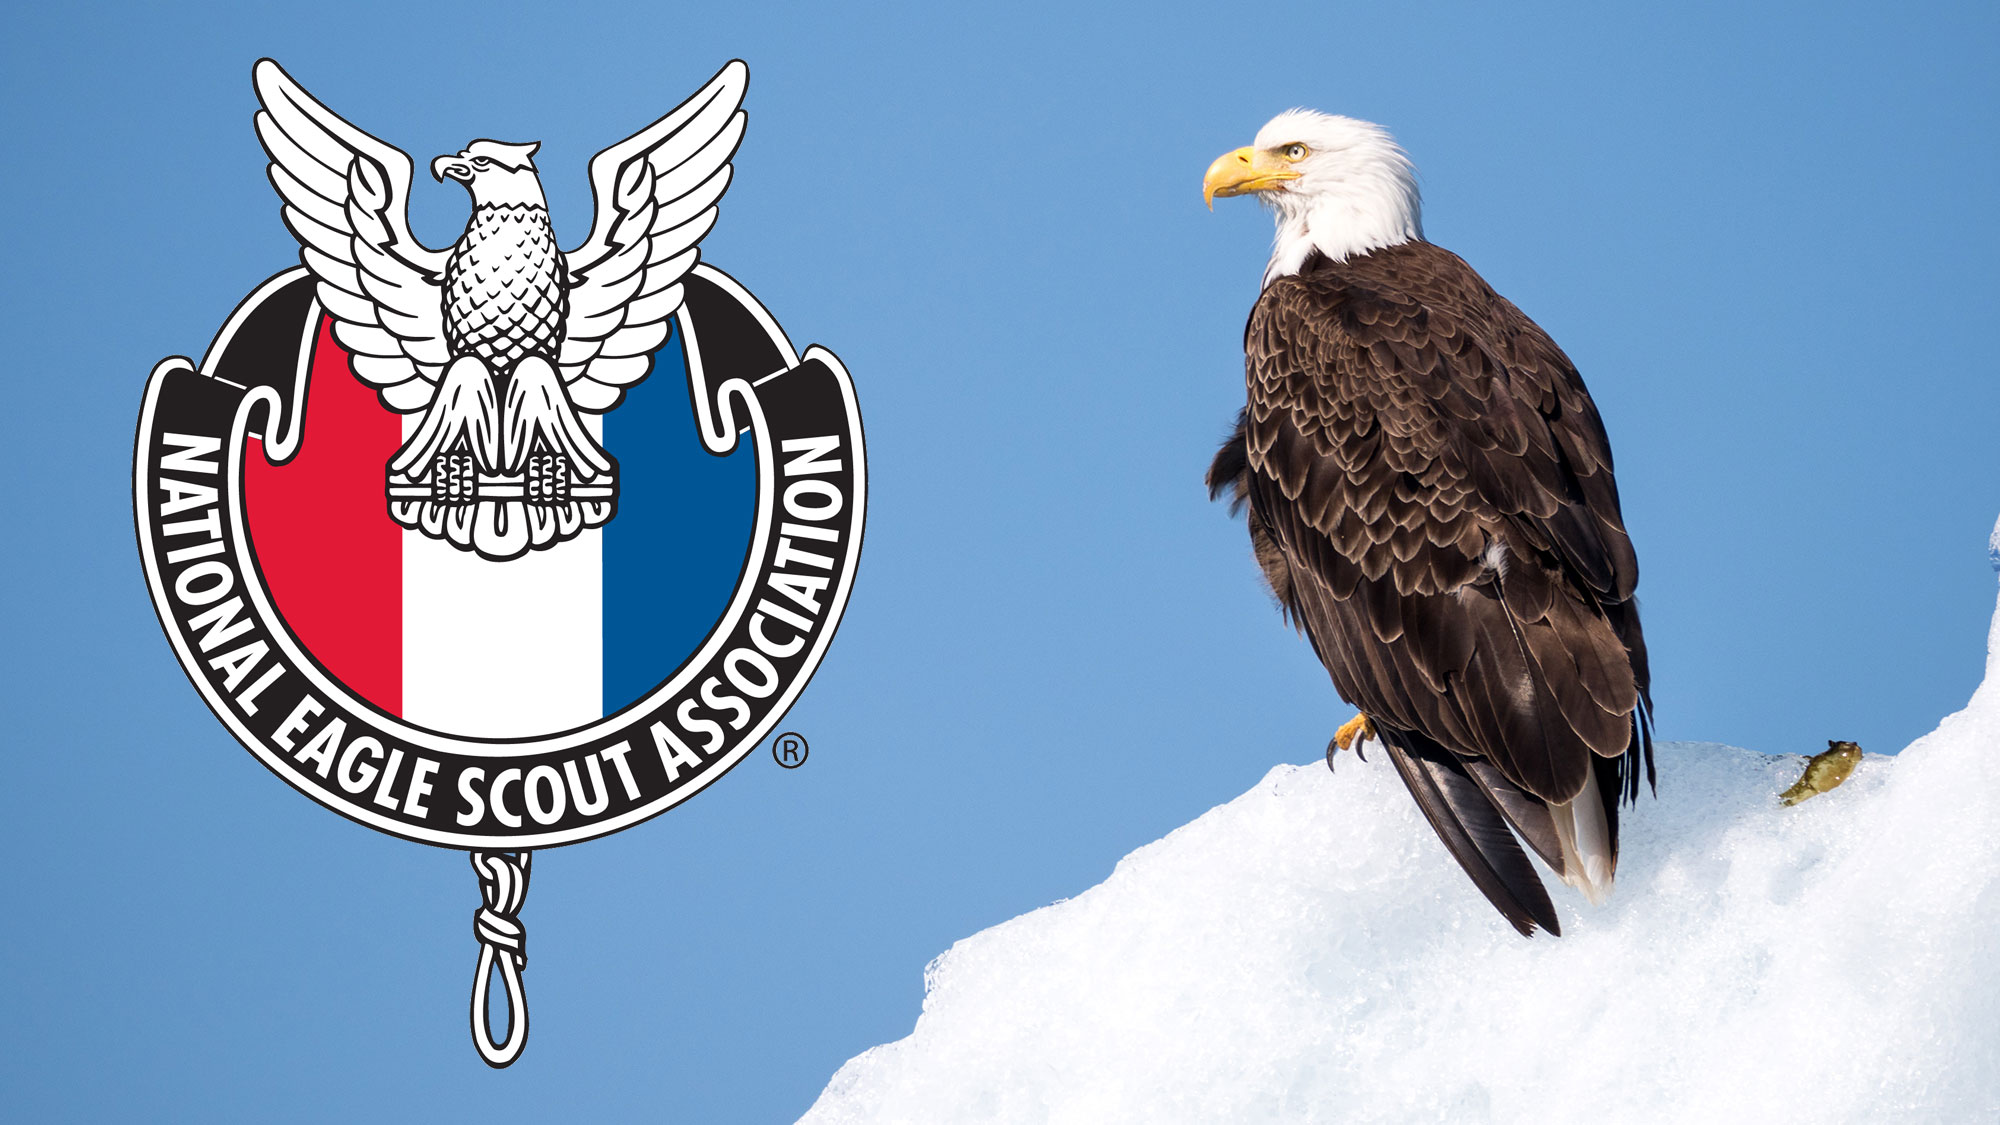 NESA Logo and Eagle on Snow